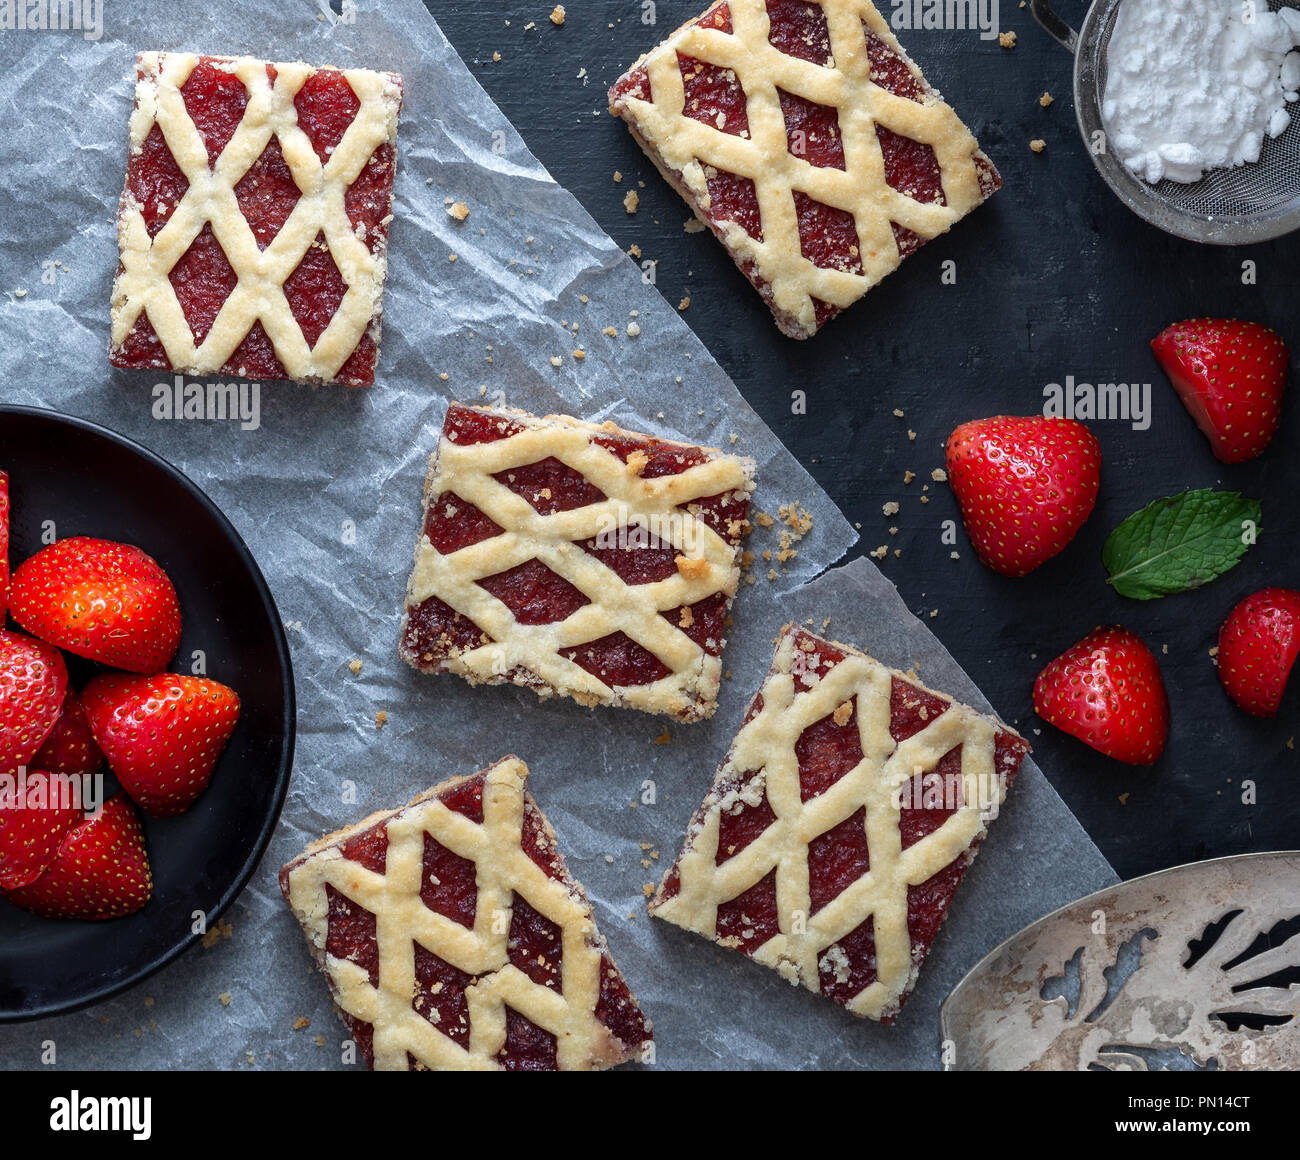 Strawberry cakes with strawberry fruits on dark background. Stock Photo